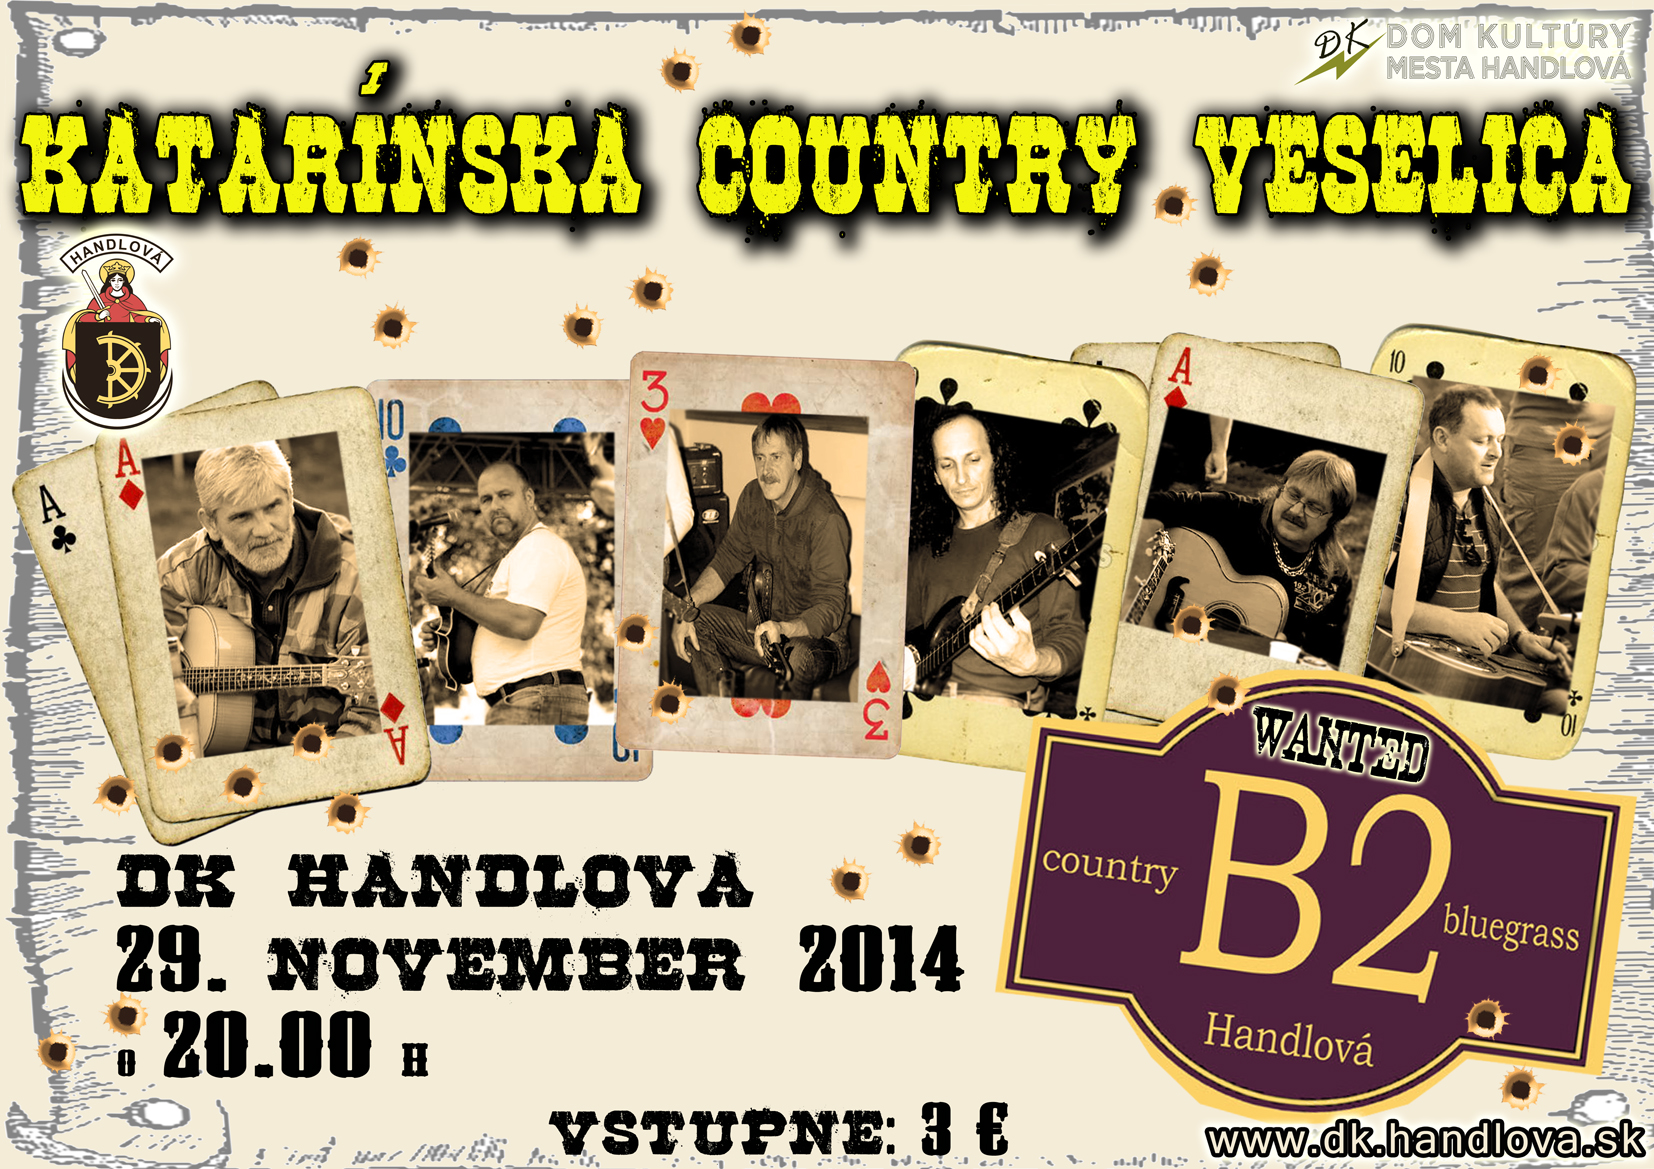 Katarnska country veselica Handlov 2014